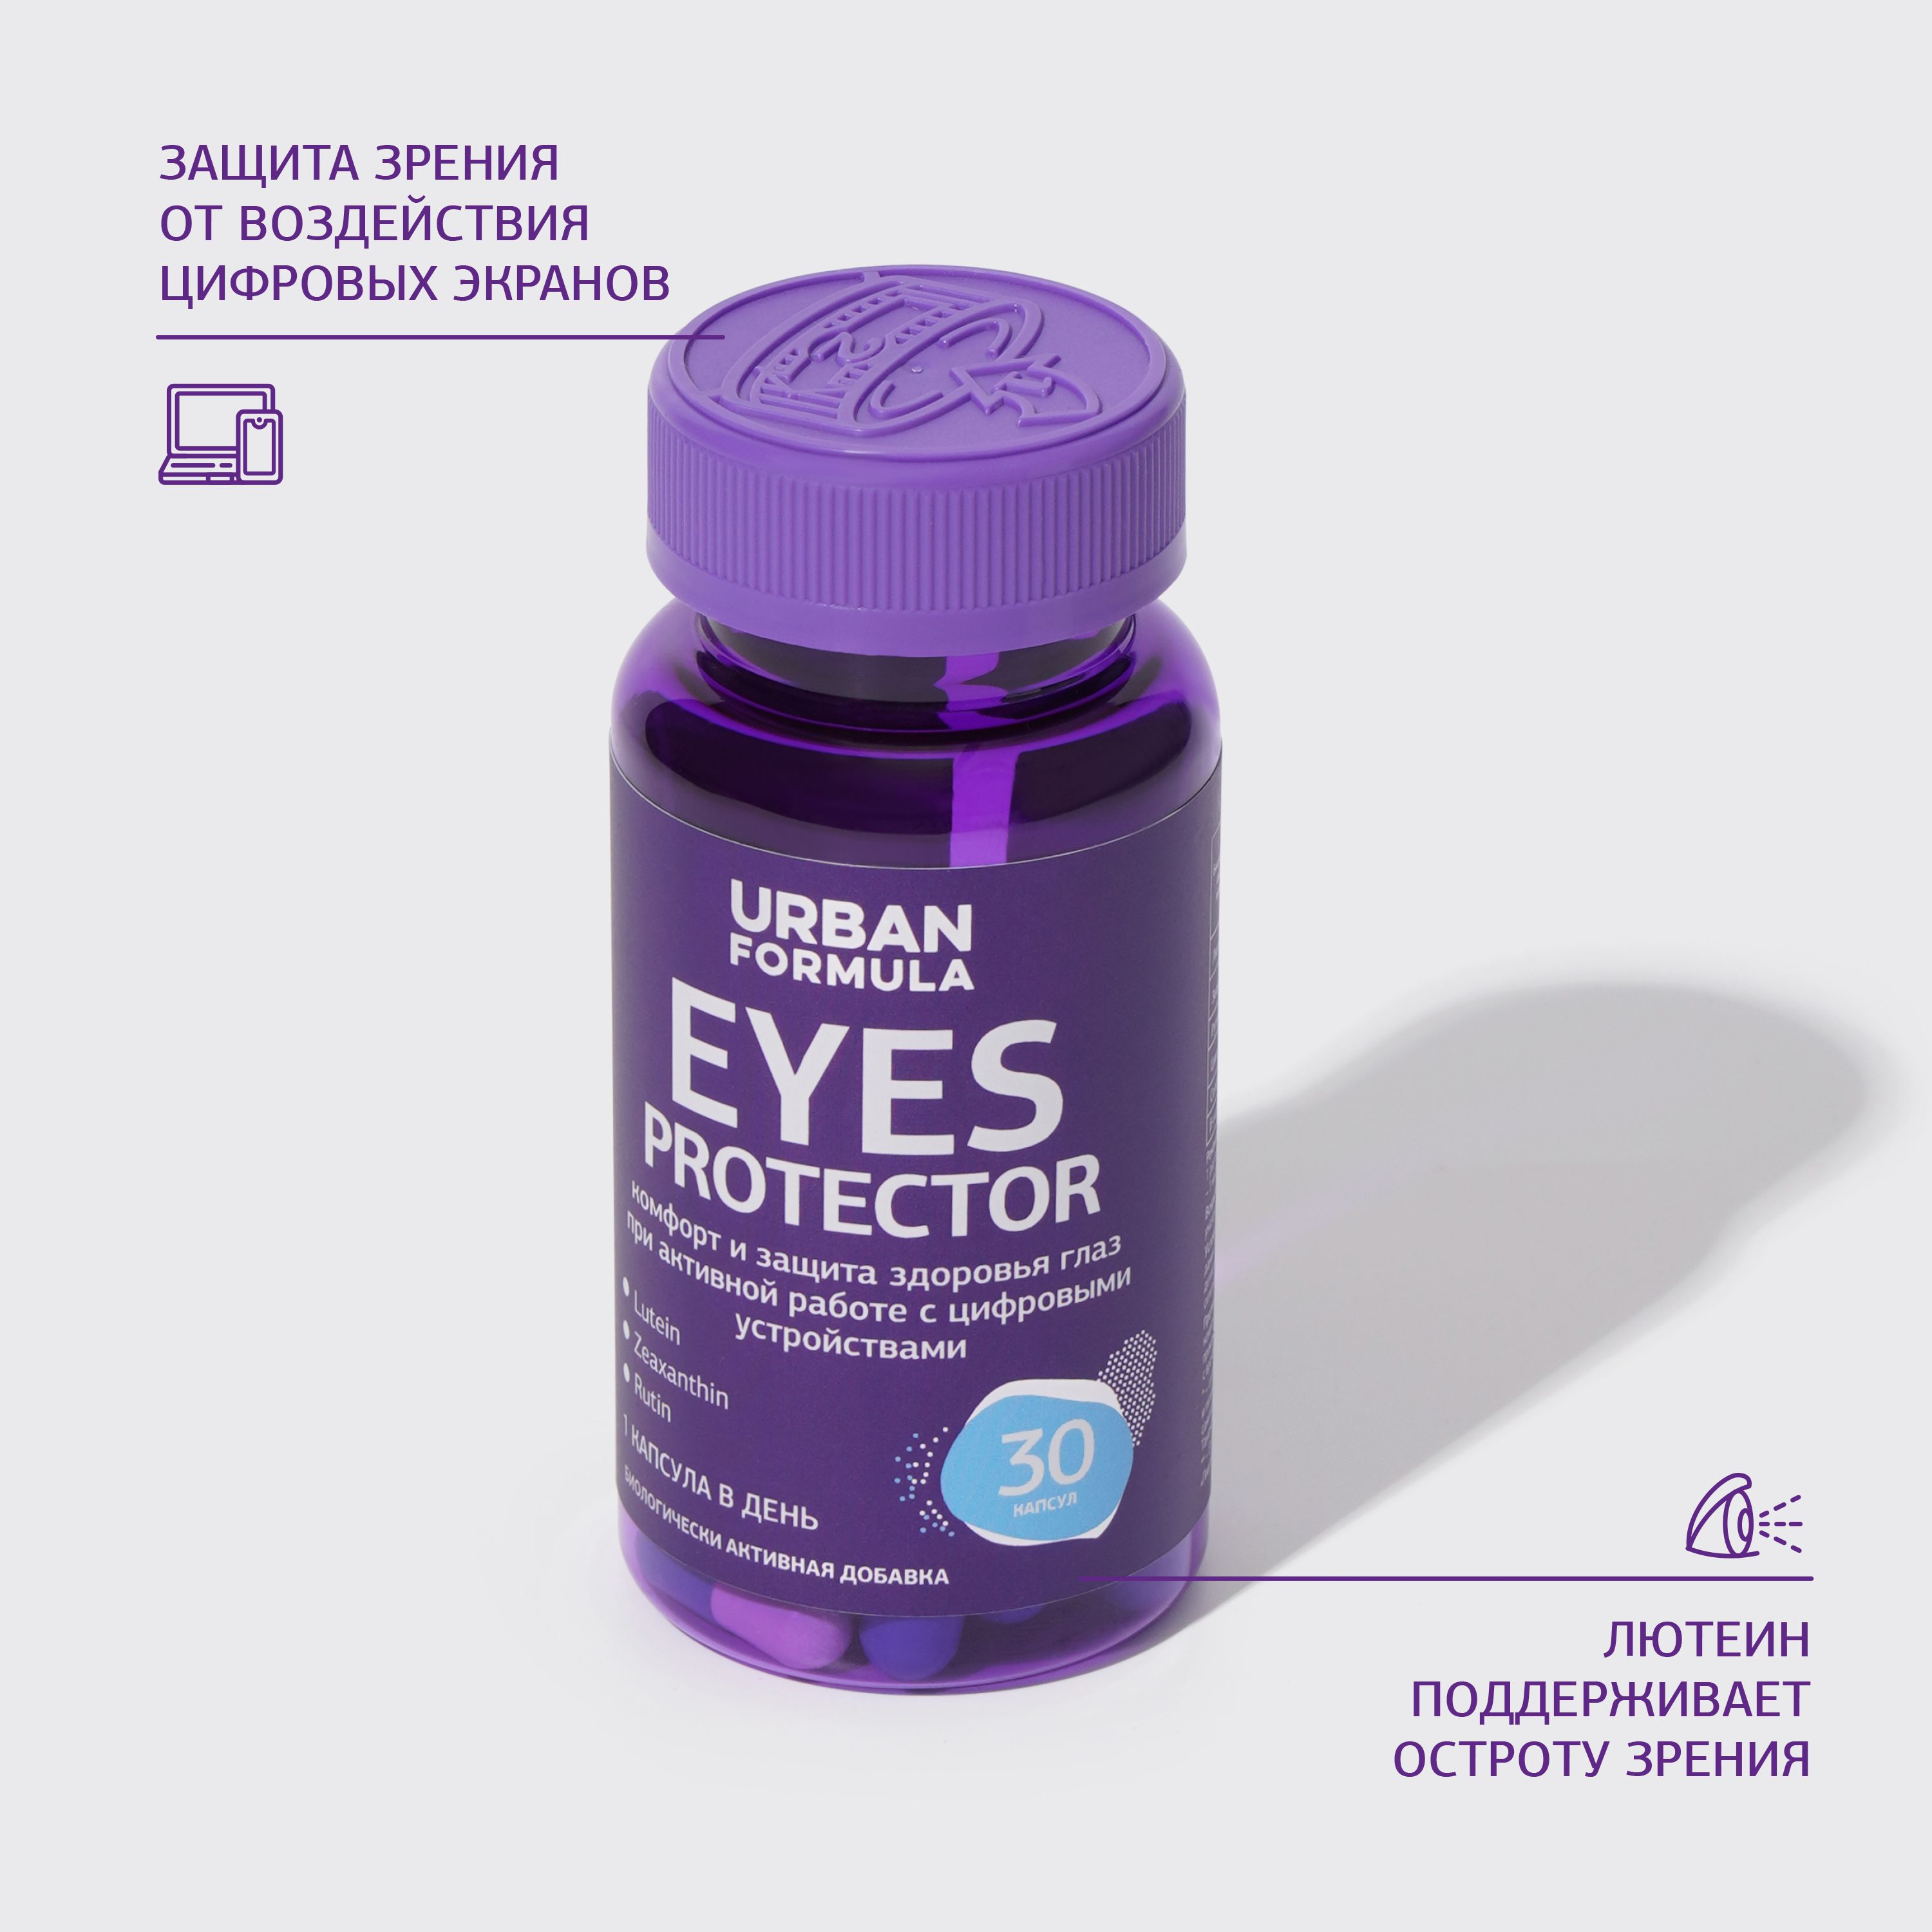 Eyes Protector